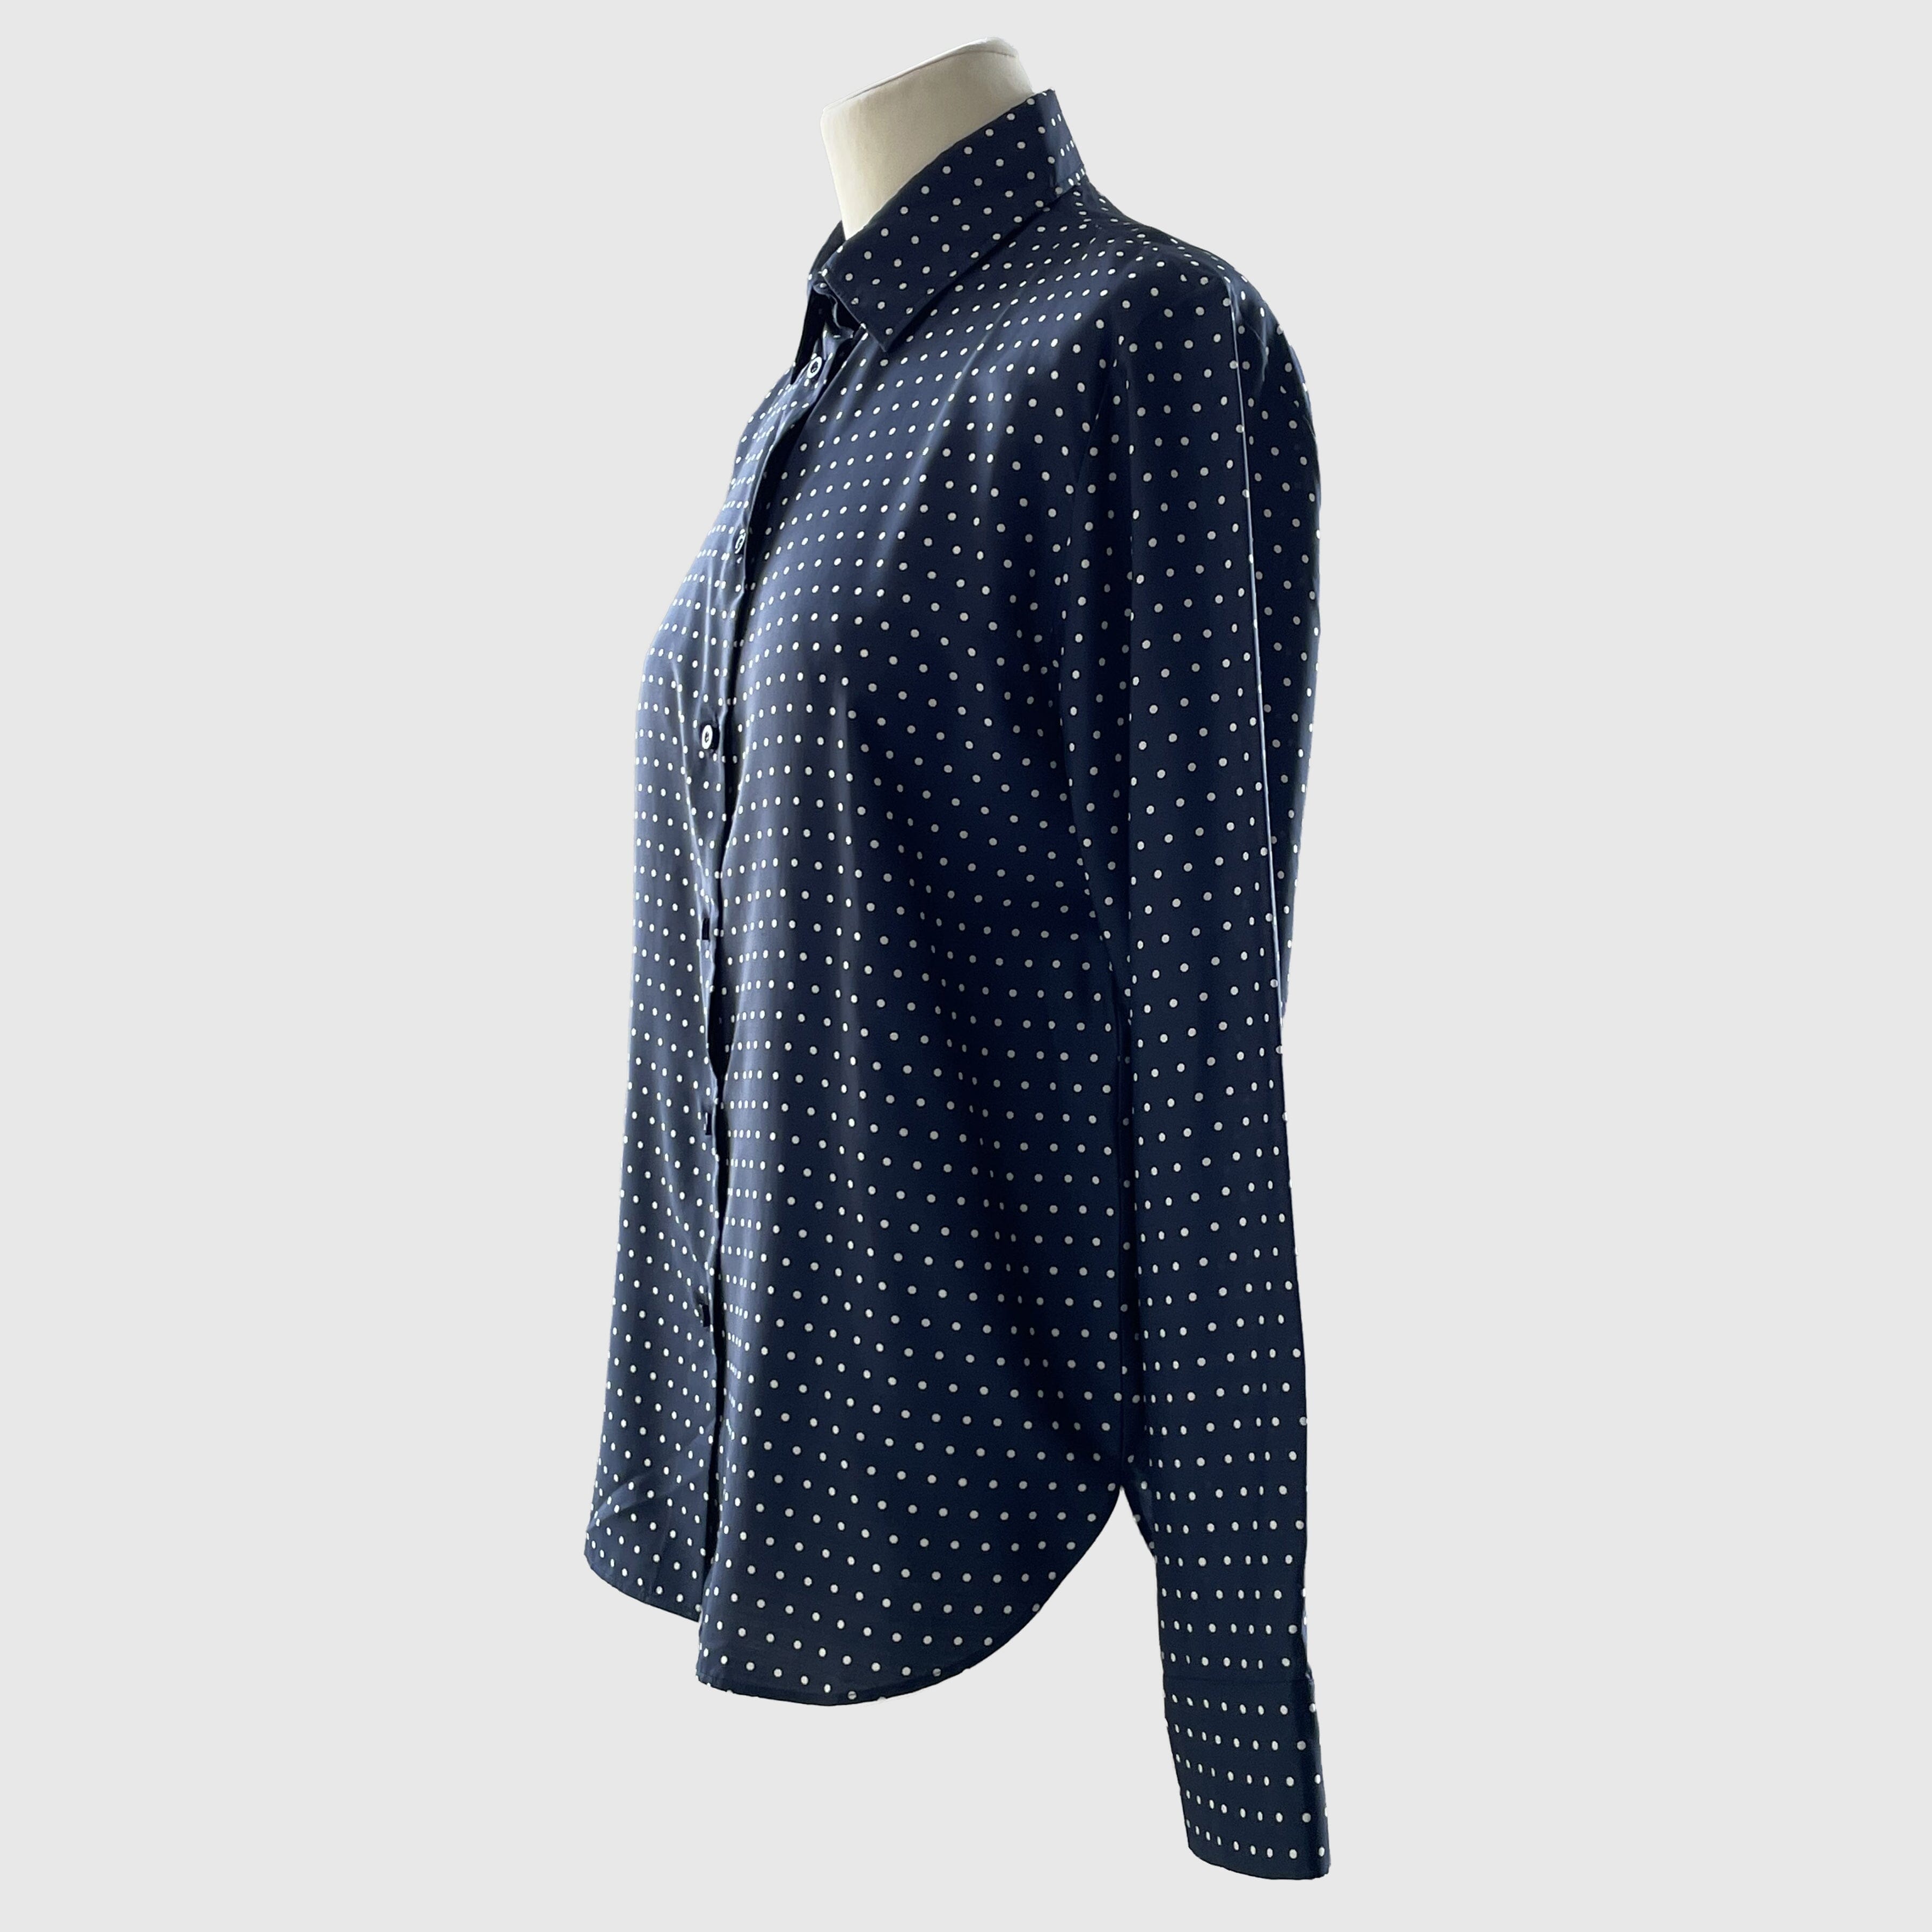 Navy Blue/White Polka Dot Button Long Sleeve Shirt